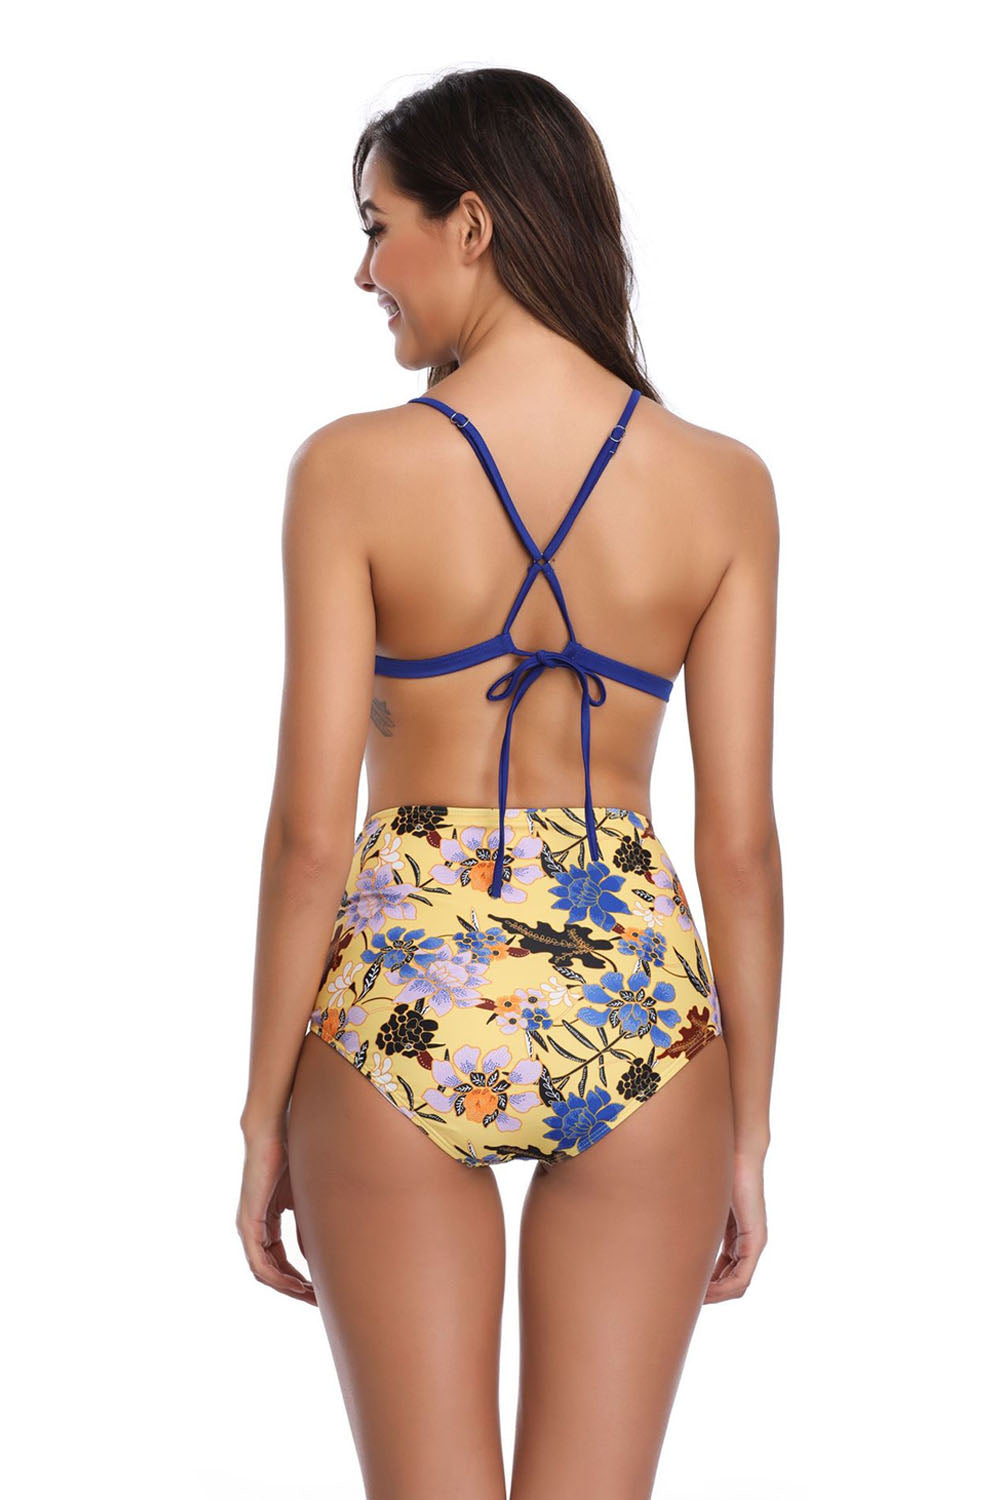 Iyasson Womens High Waist Two Pieces Bikini Set Padded Floral Printed Swimsuit